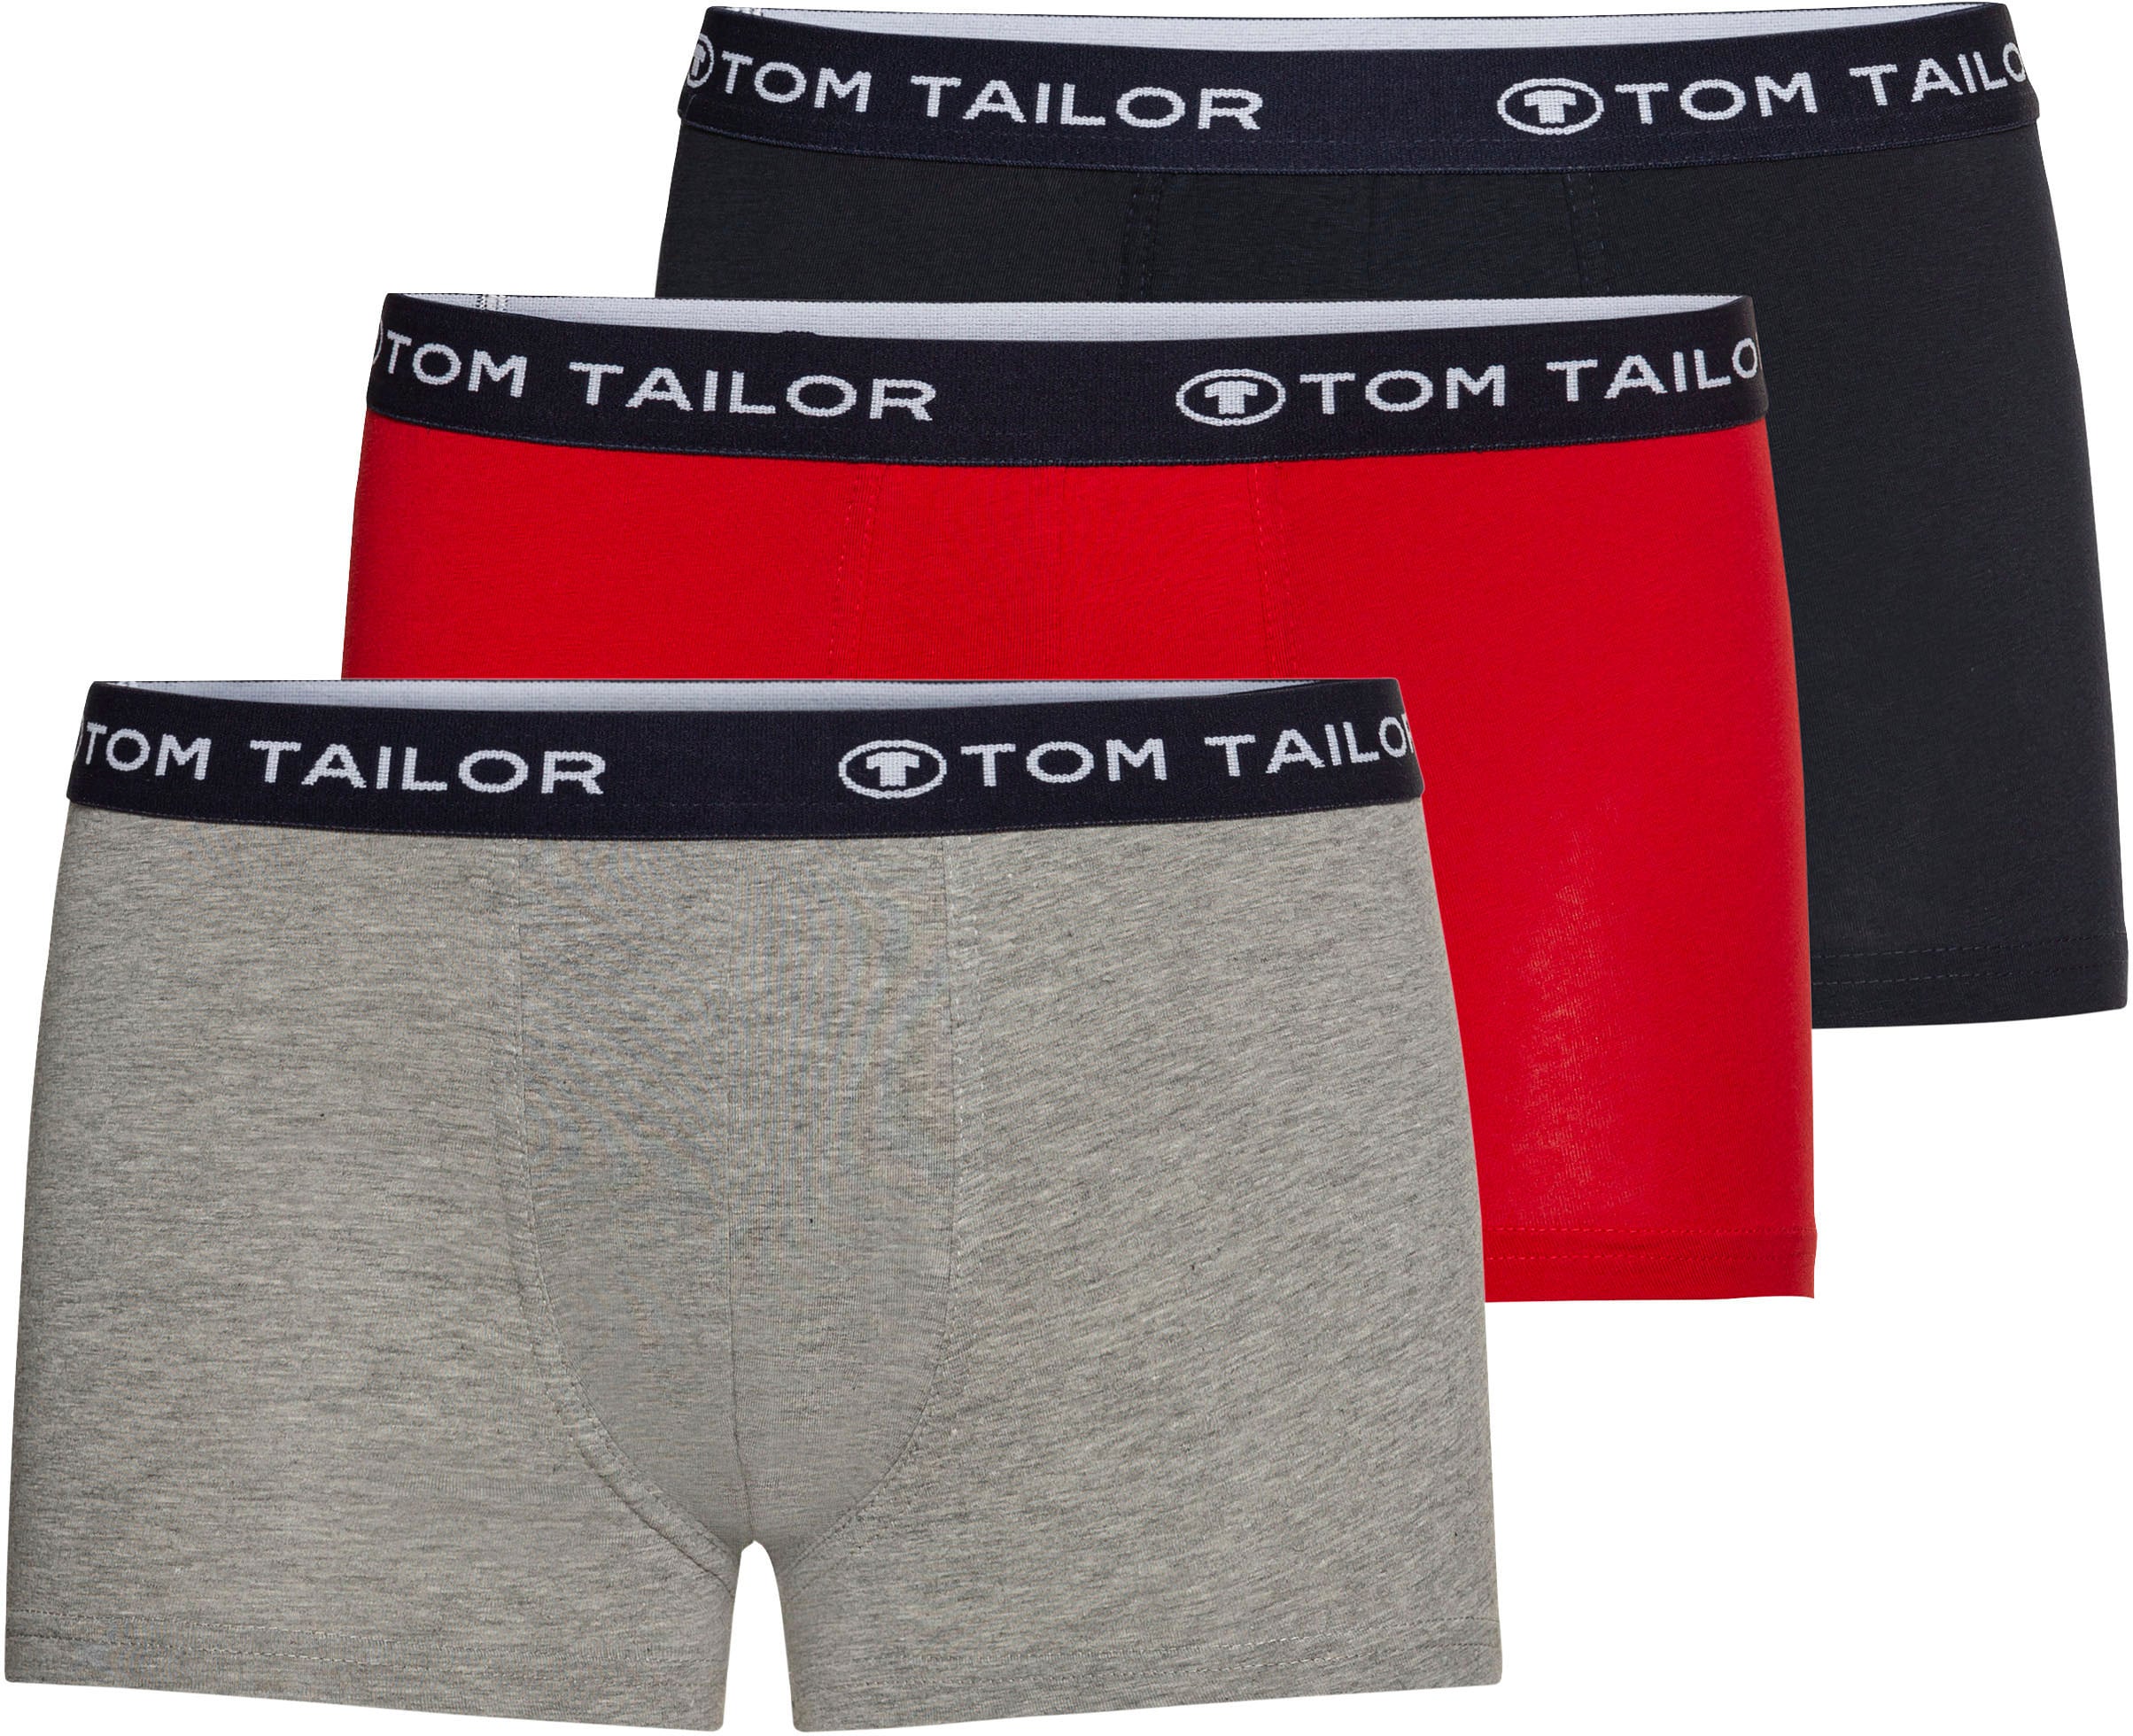 TOM TAILOR Herren Hip Pants, Unterhose, Elastan, Baumwolle, Single Jersey, rot Melange, 3er Pack XL